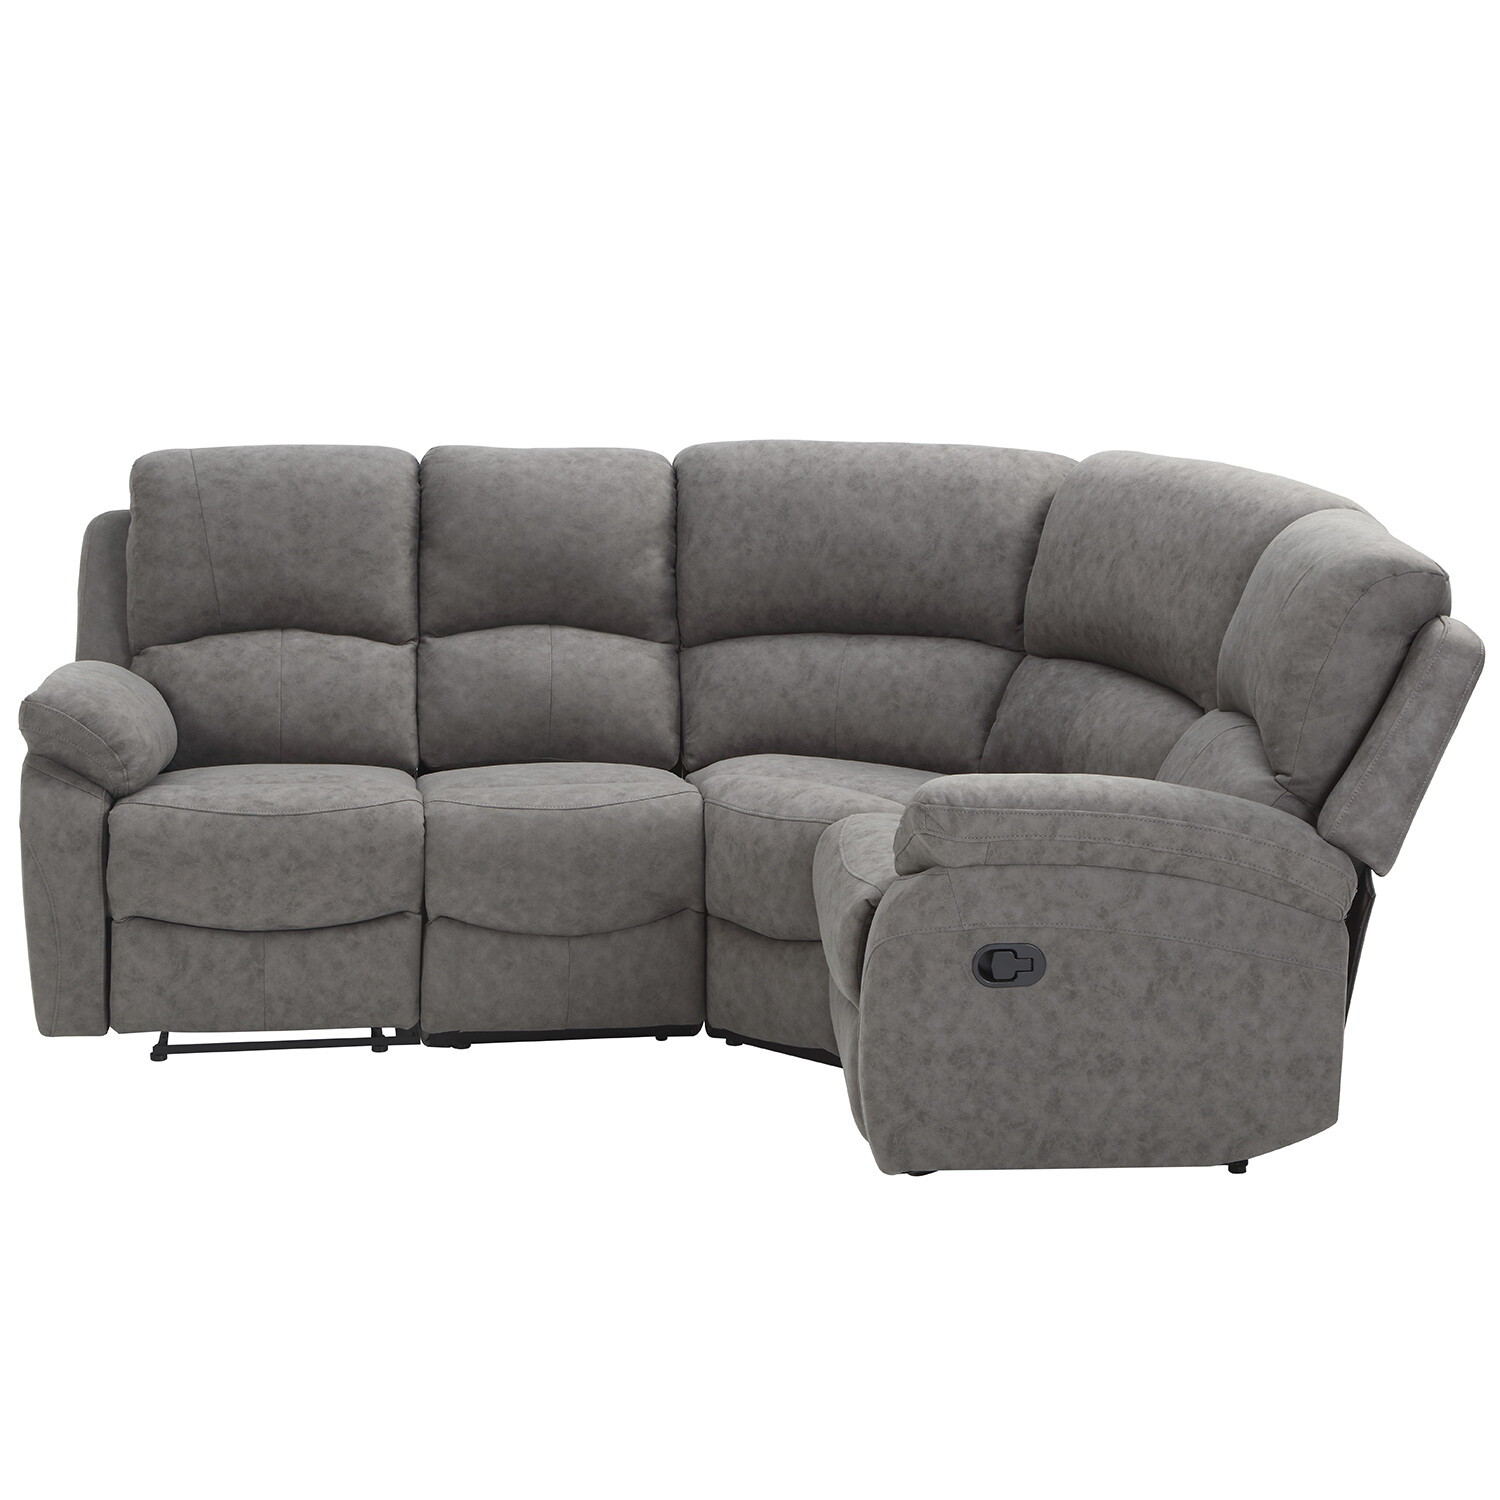 Milano 4 Seater Grey Fabric Reversible Corner Sofa Image 3